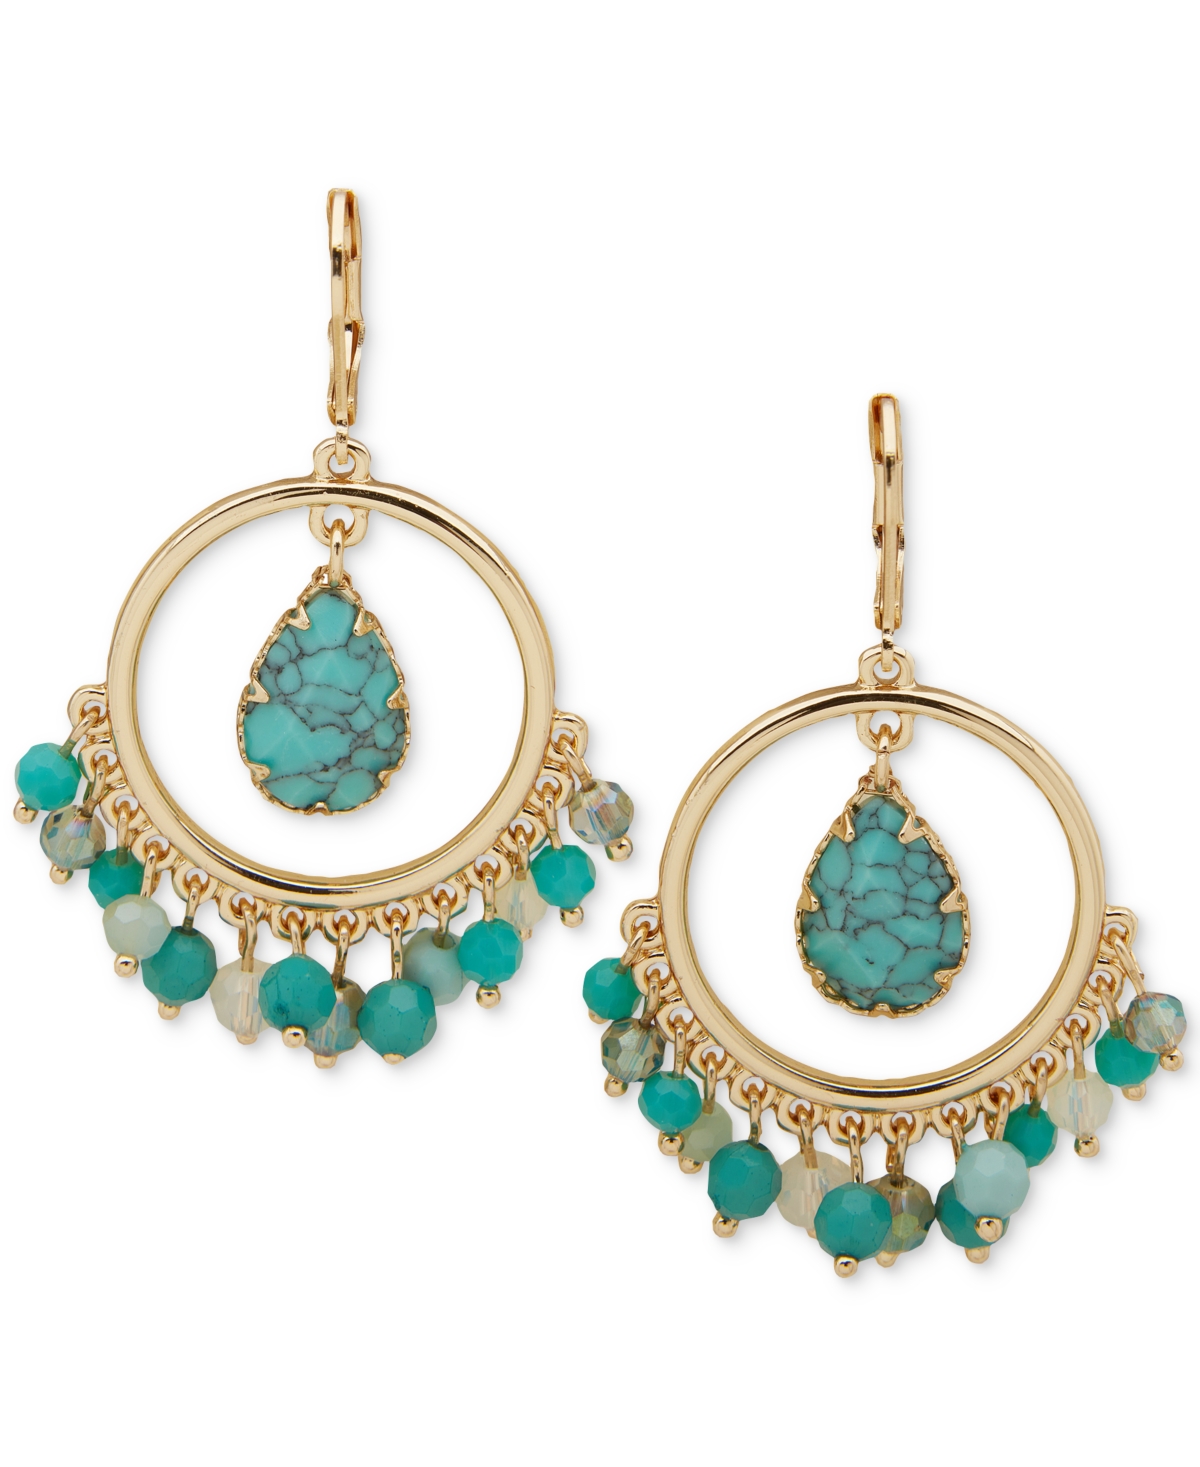 Gold-Tone Beaded Orbital Stone Drop Earrings - Turquoise